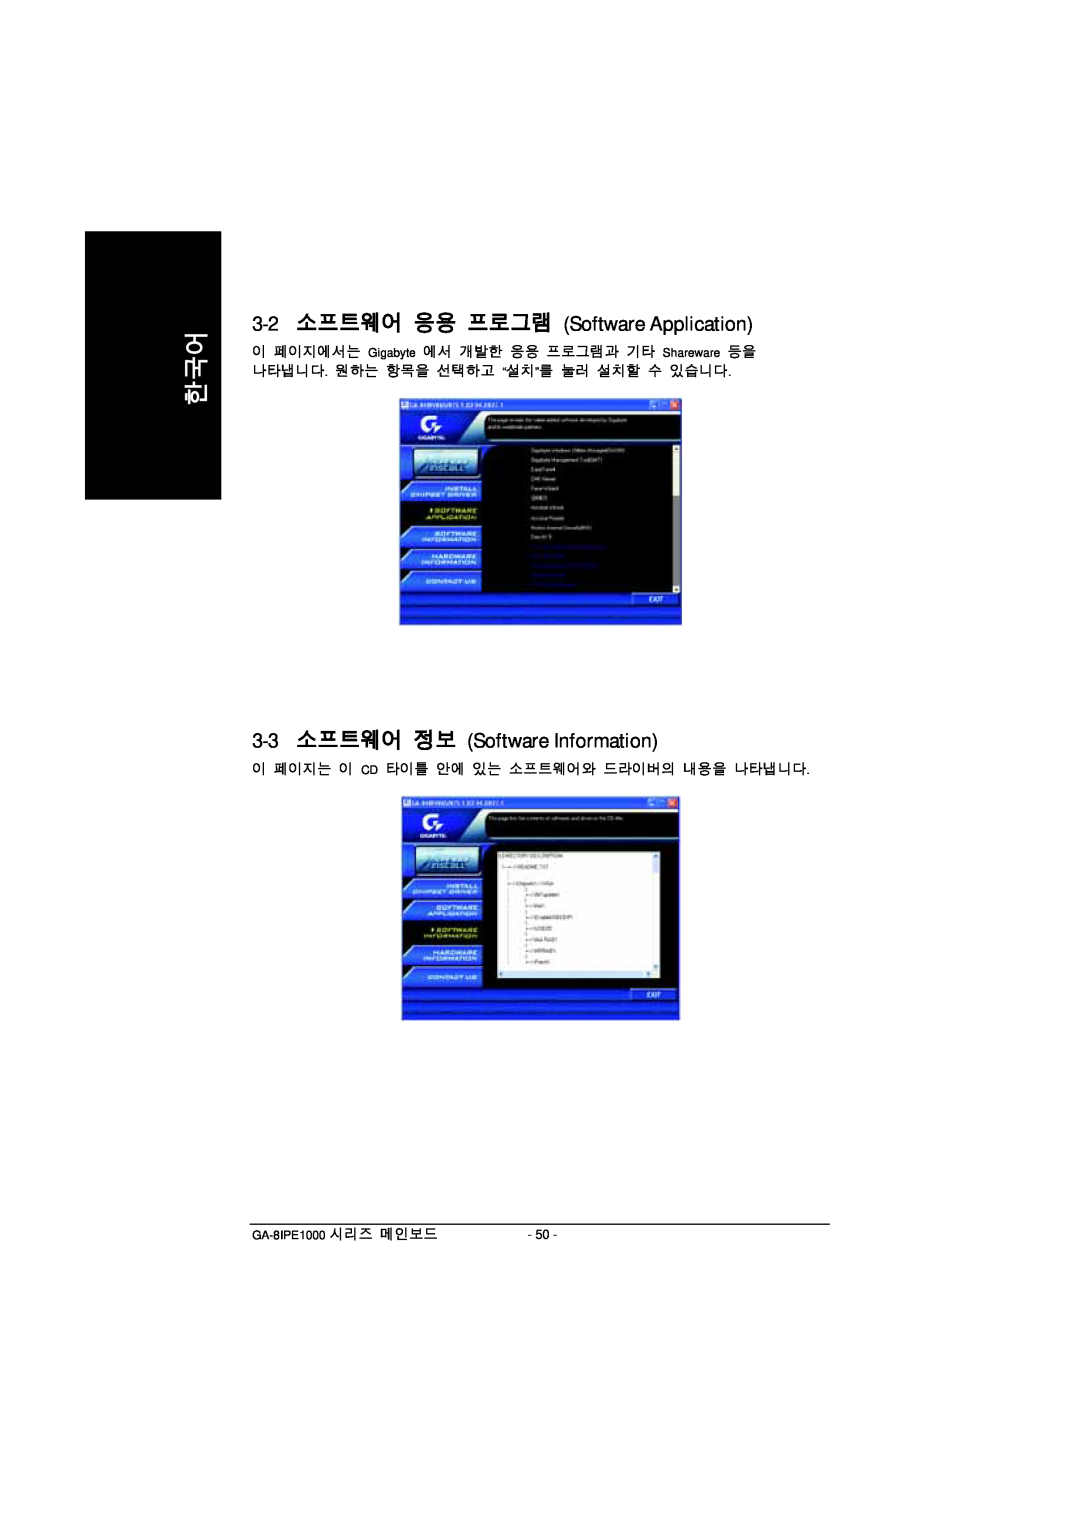 Intel GA-8IPE1000 manual 3-2 소프트웨어 응용 프로그램 Software Application, 3-3 소프트웨어 정보 Software Information 